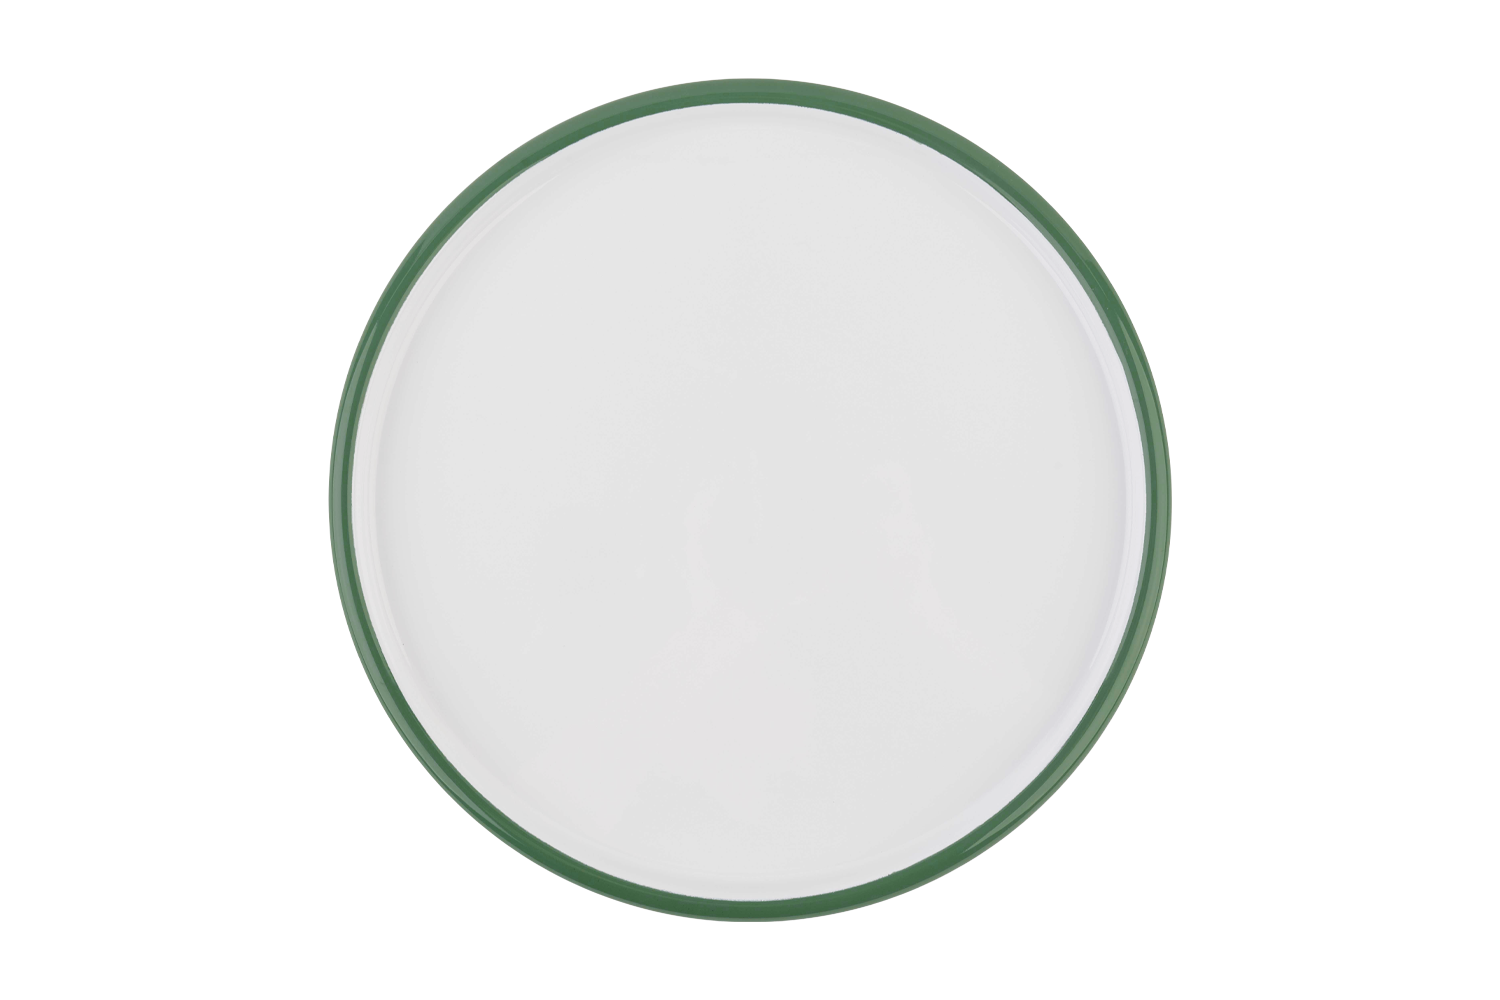 Blick auf das olivgrüne Emaille-Pizzablech